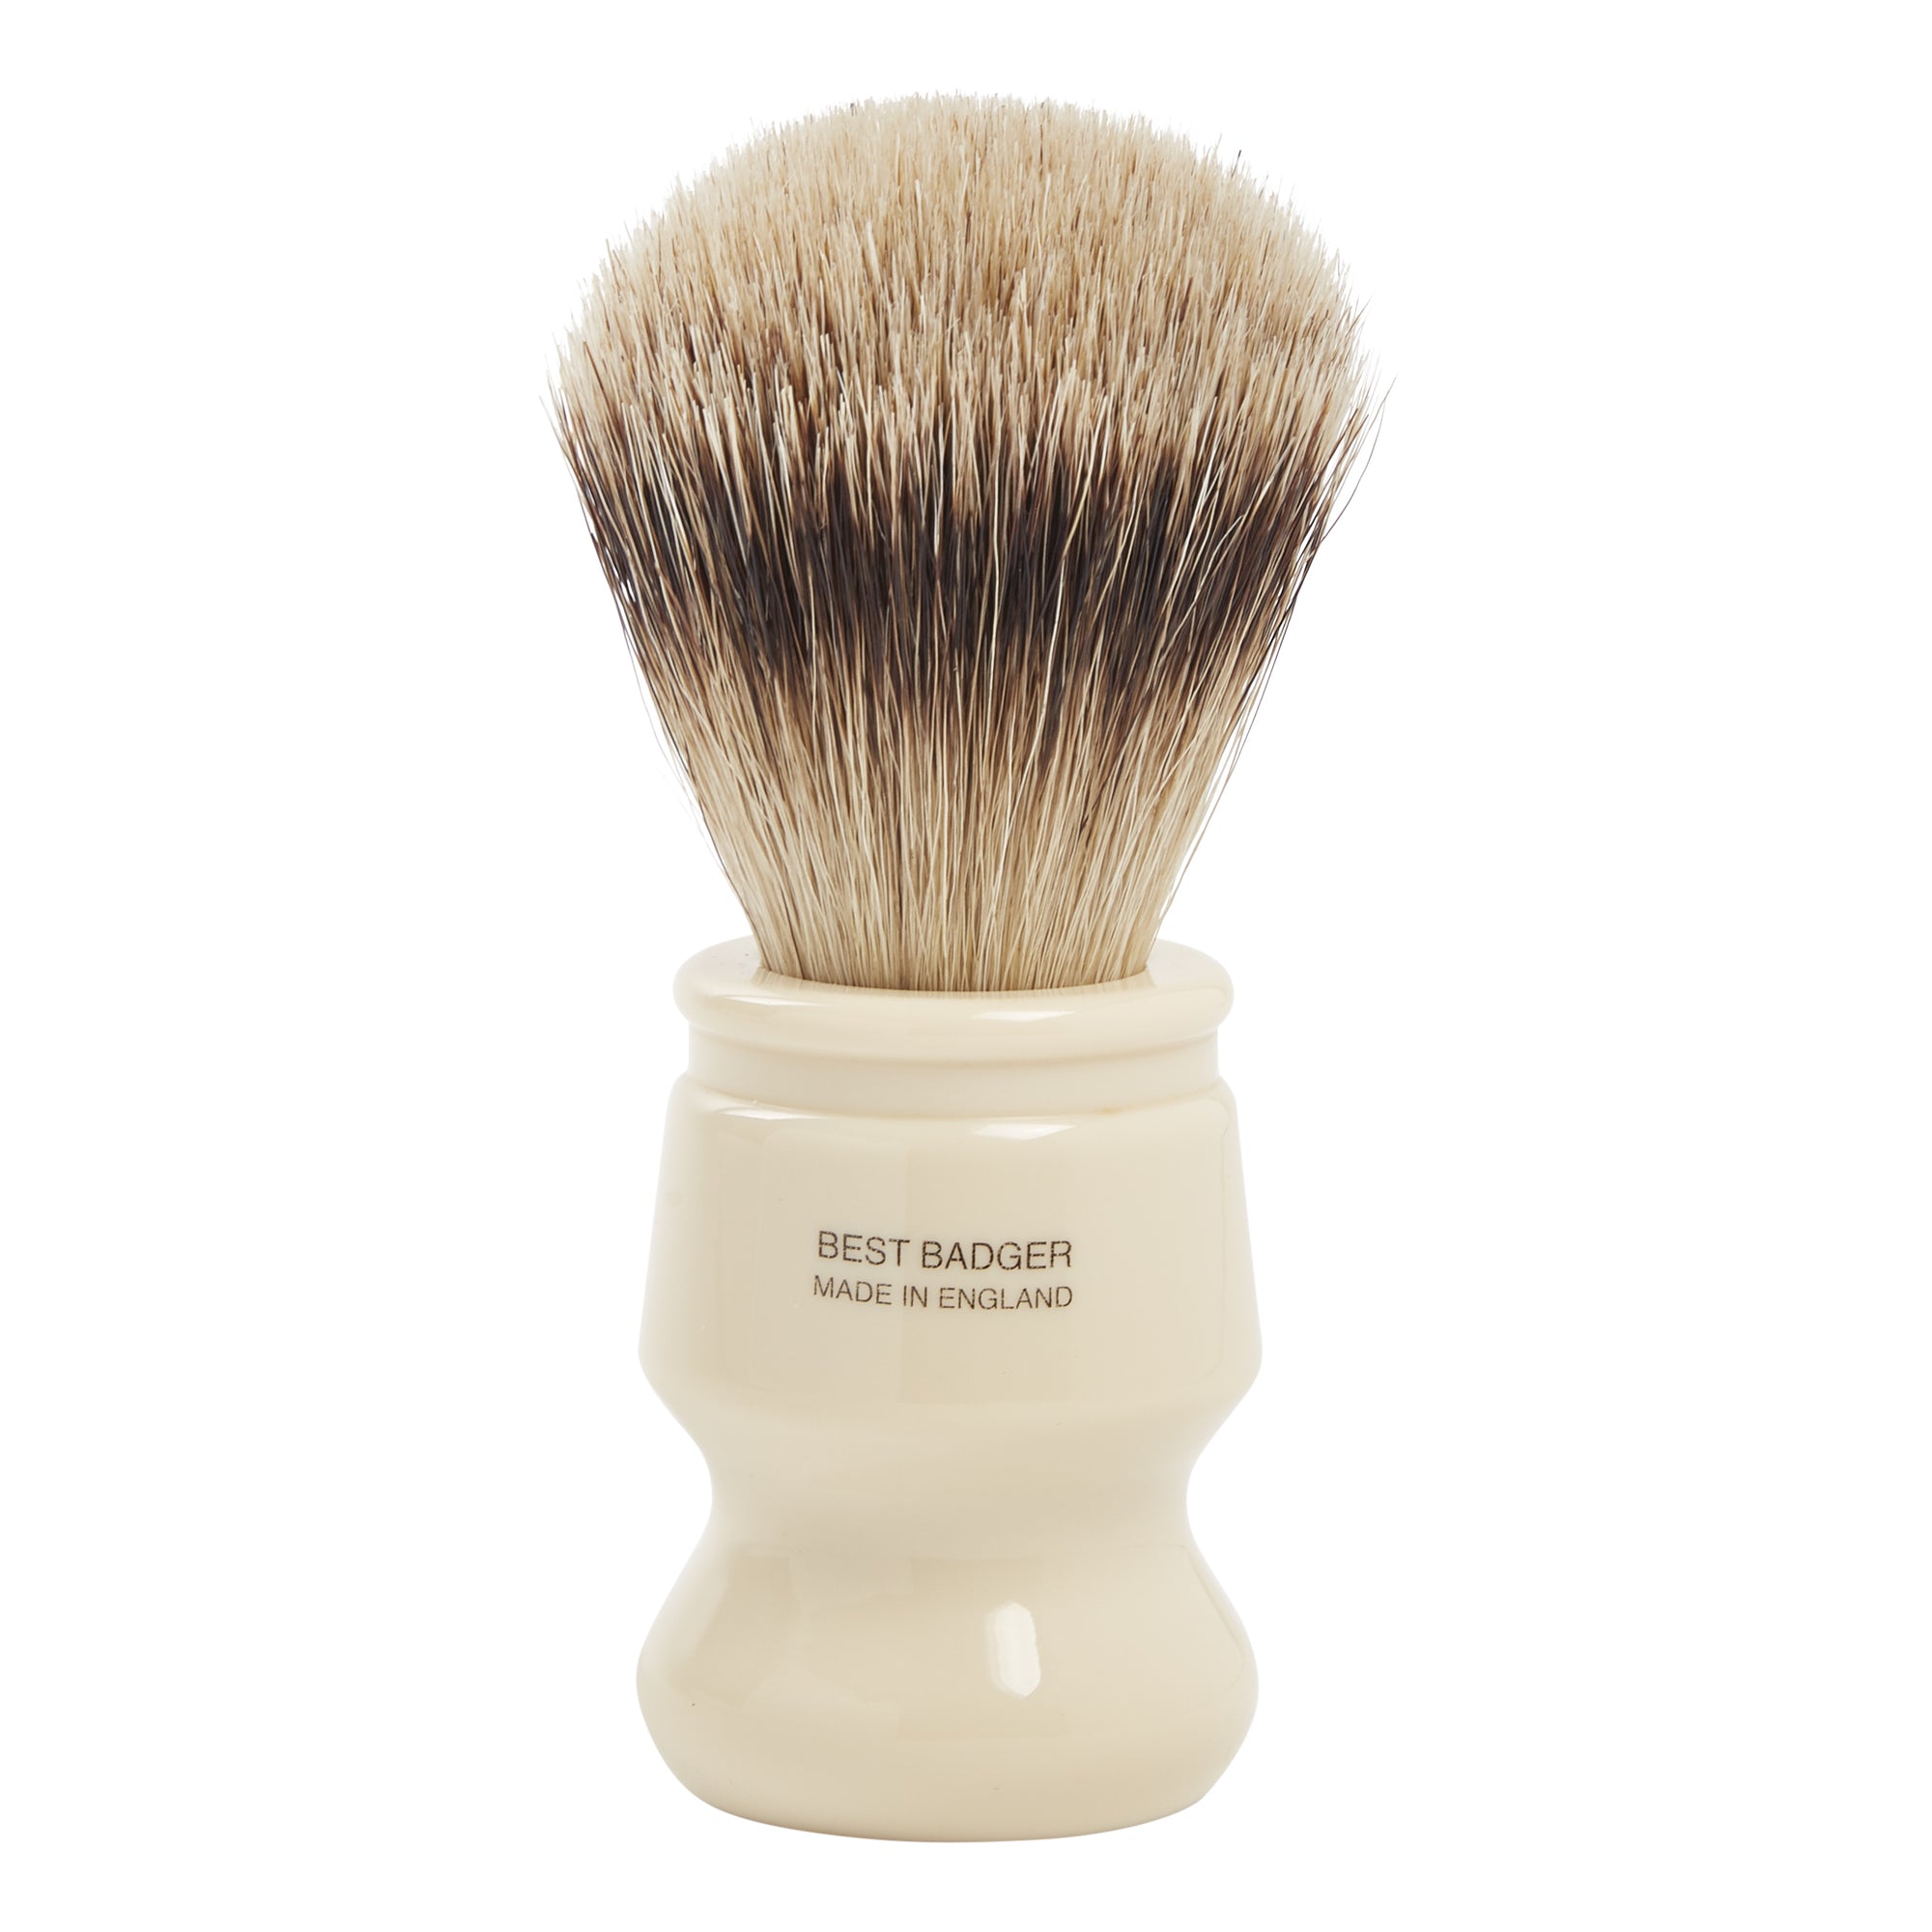 An entry-level Kirby Allison Best Badger Brush on a white background, perfect for wet shaving.